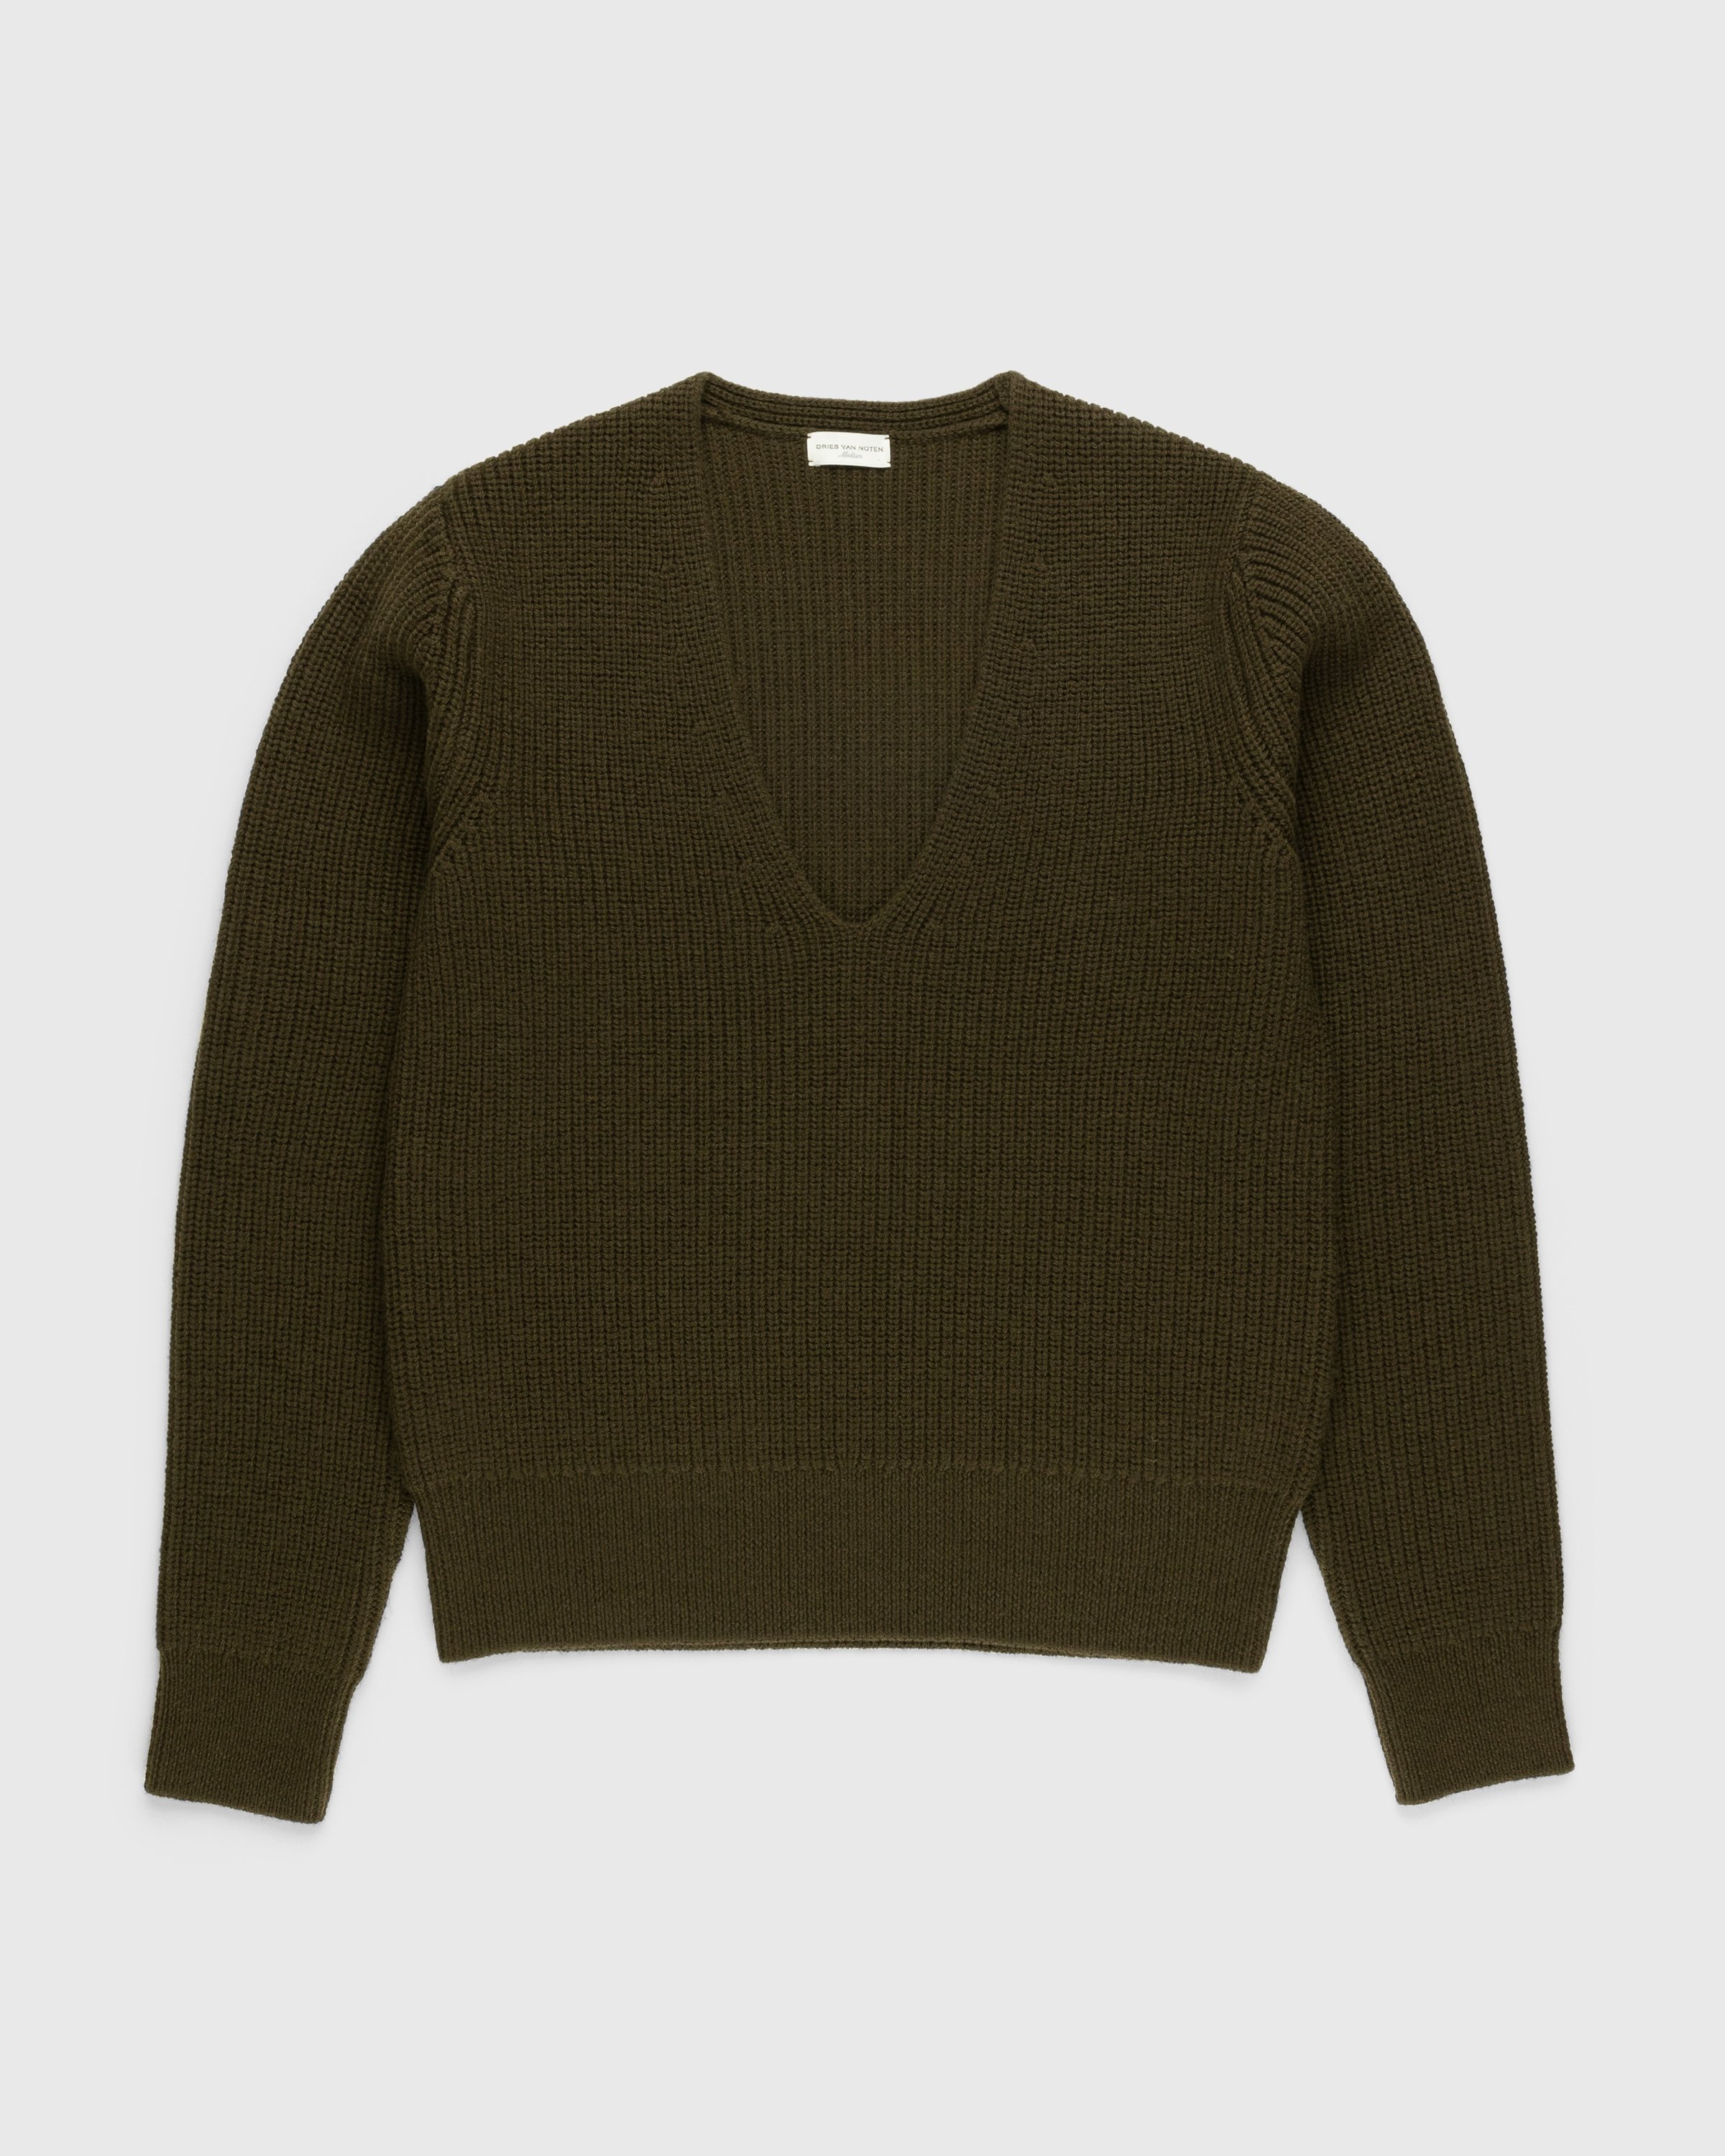 Dries van Noten - Newton Merino Sweater Green - Clothing - Green - Image 1